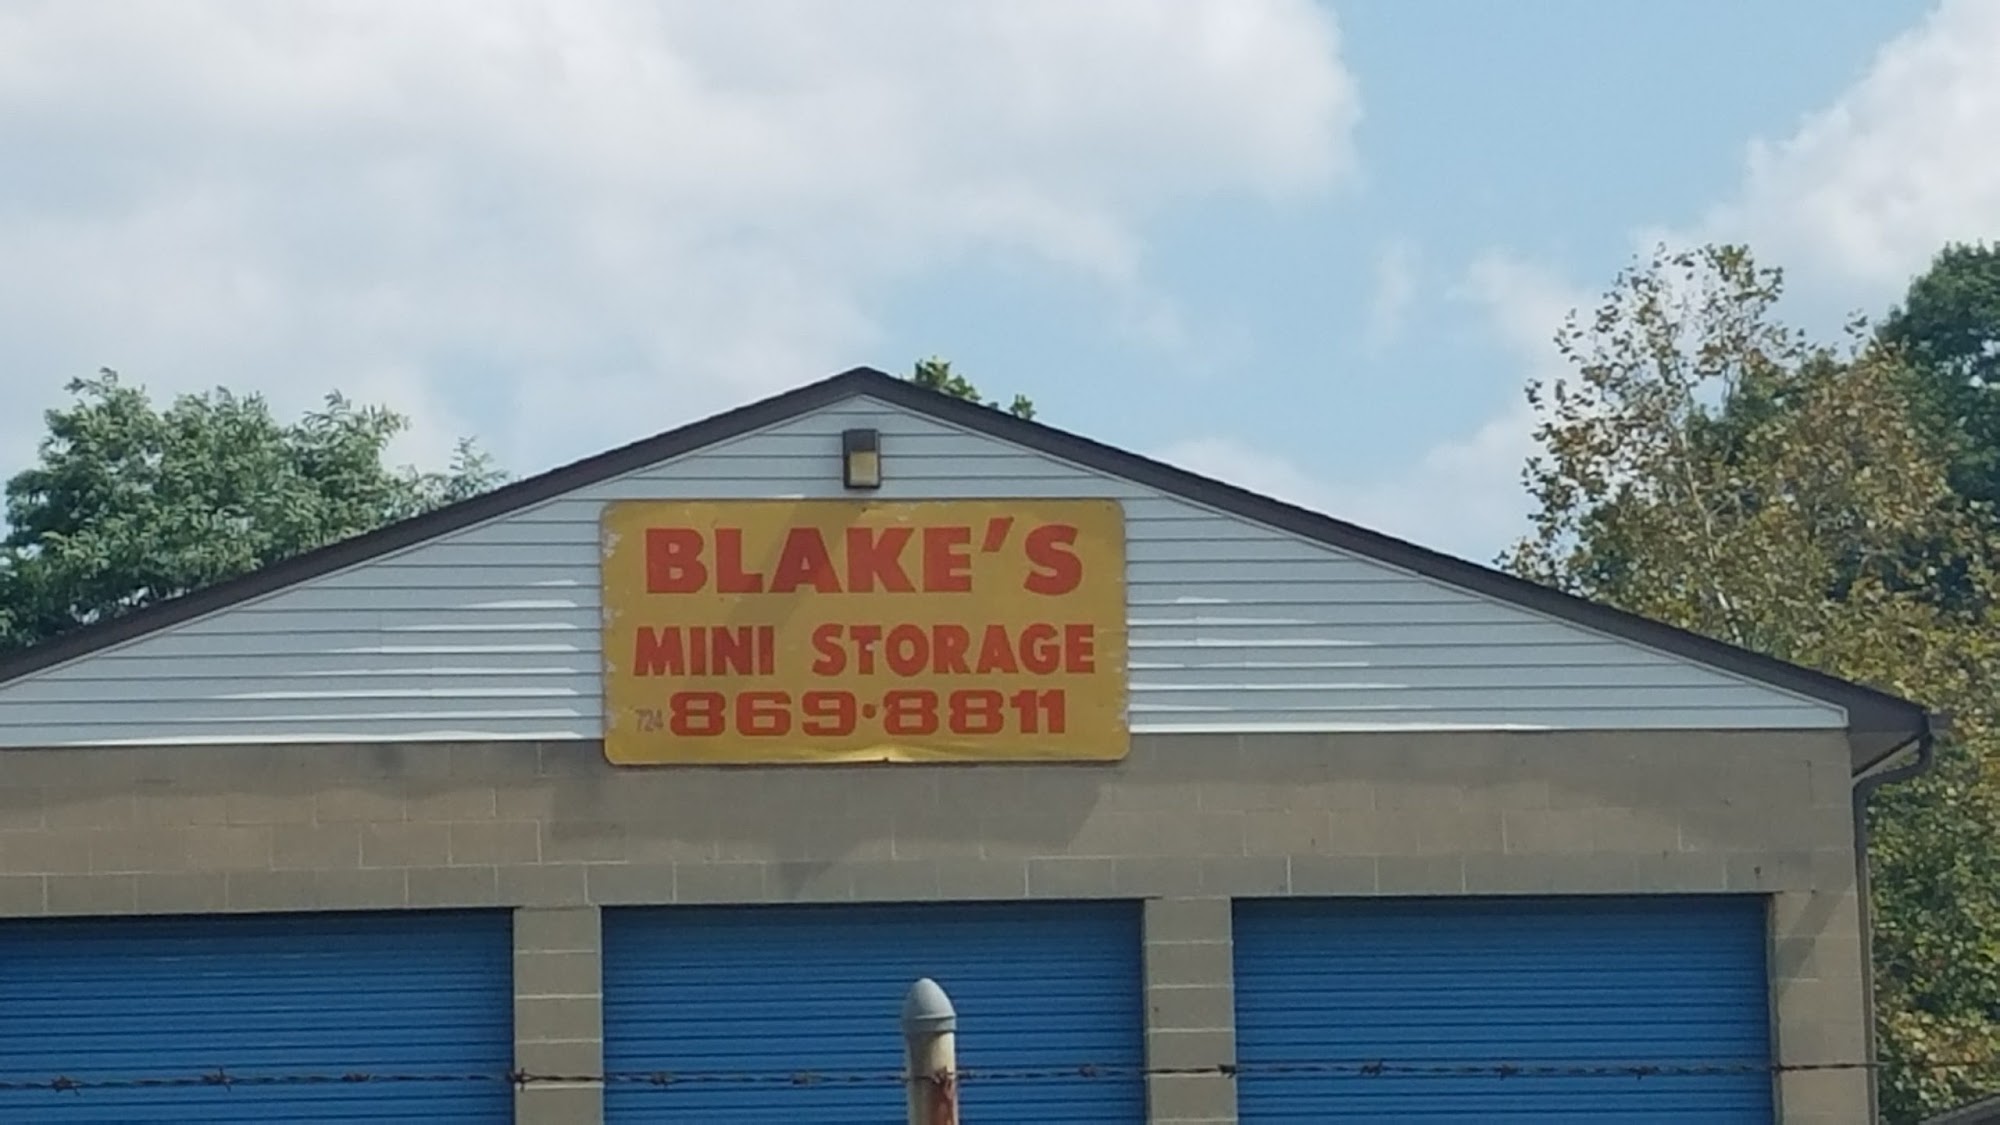 Blake's Mini Storage Inc